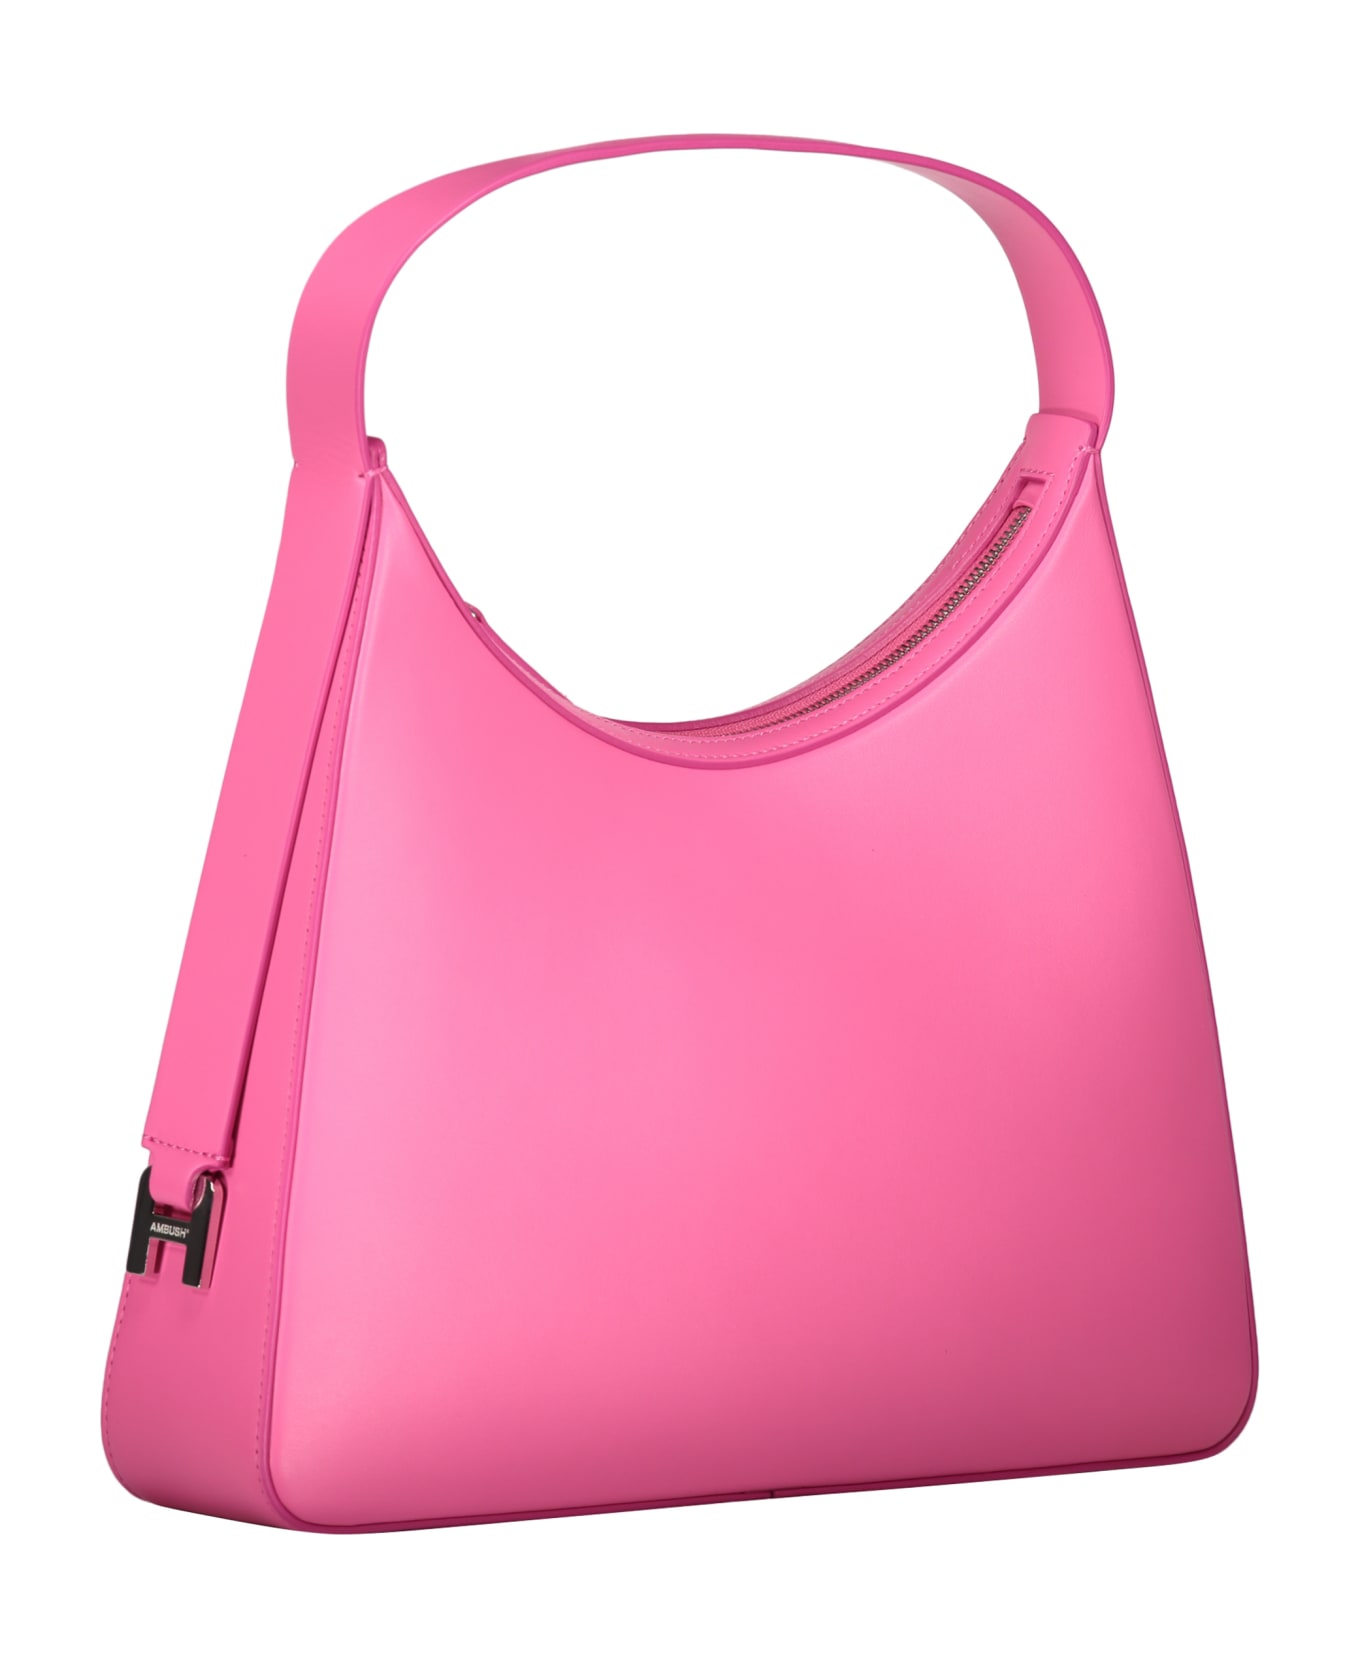 AMBUSH Leather Handbag - Pink